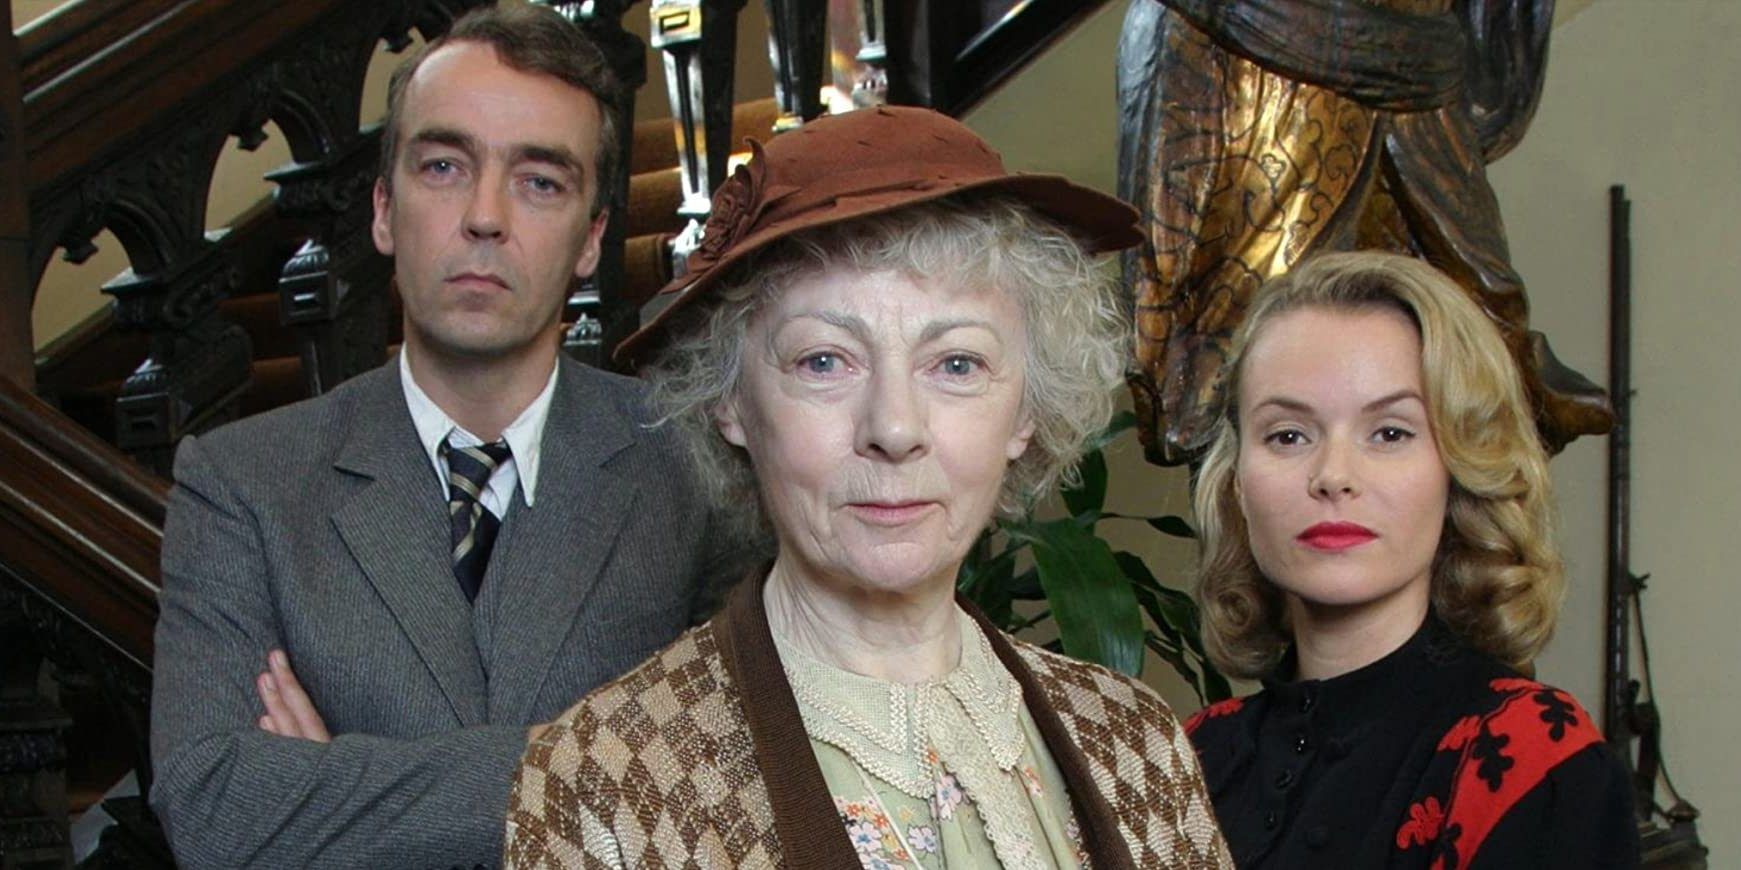 Agatha Christies Marple The 10 Best Episodes Ranked (According To IMDb)